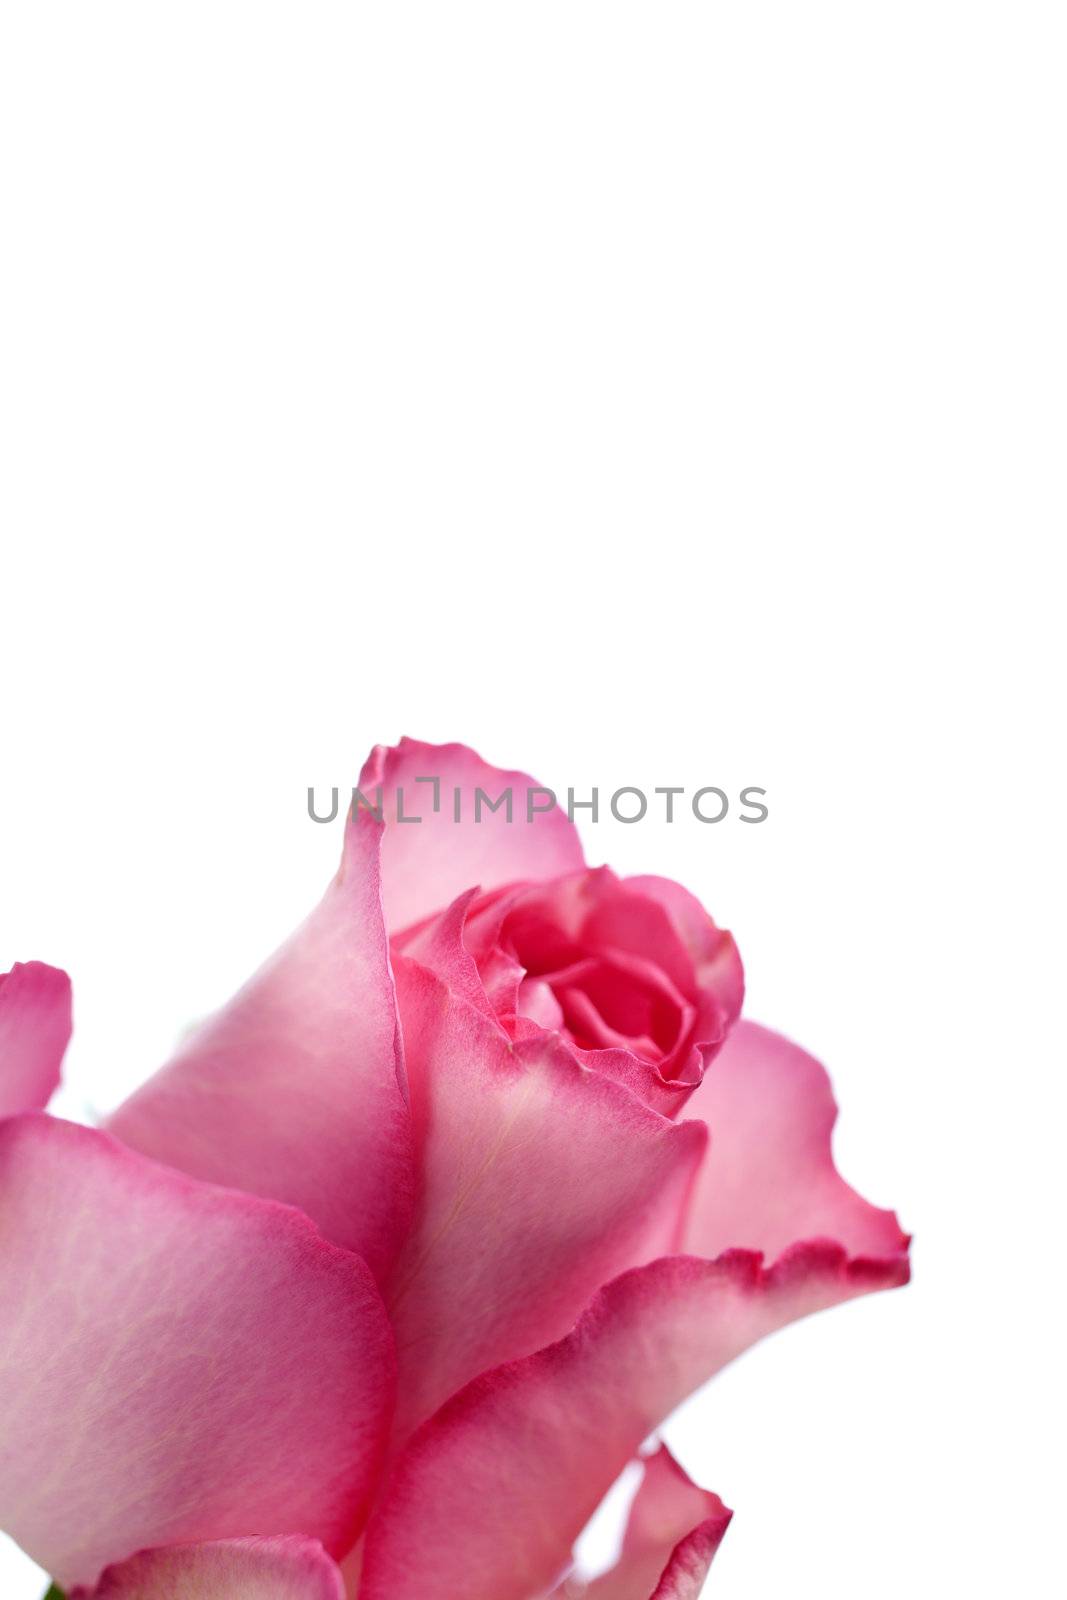 Rose on white background by studiofi